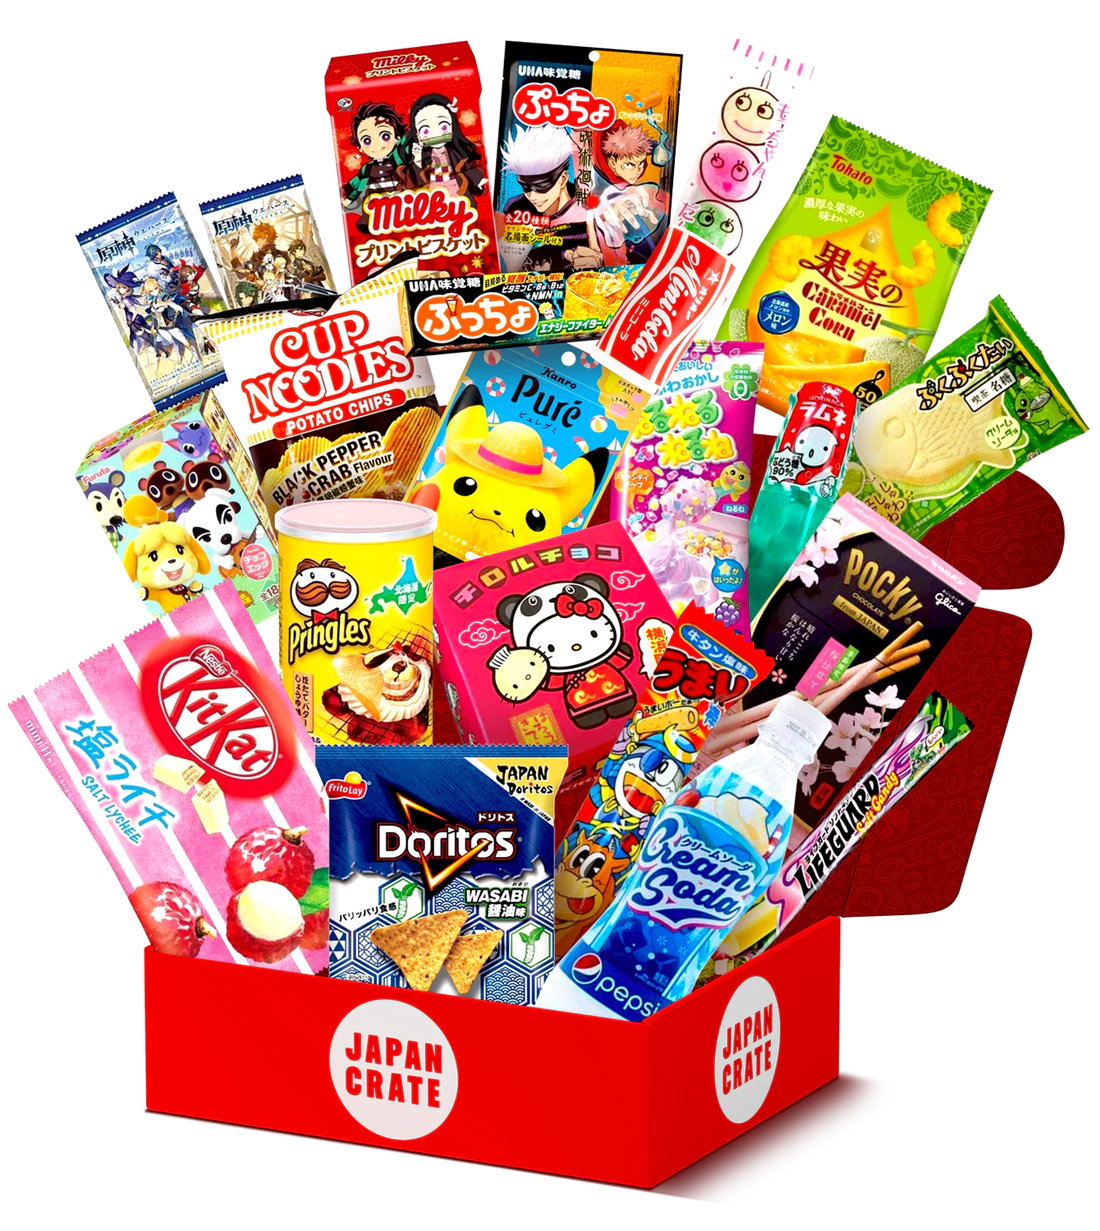 Japan Crate box 50 gift card